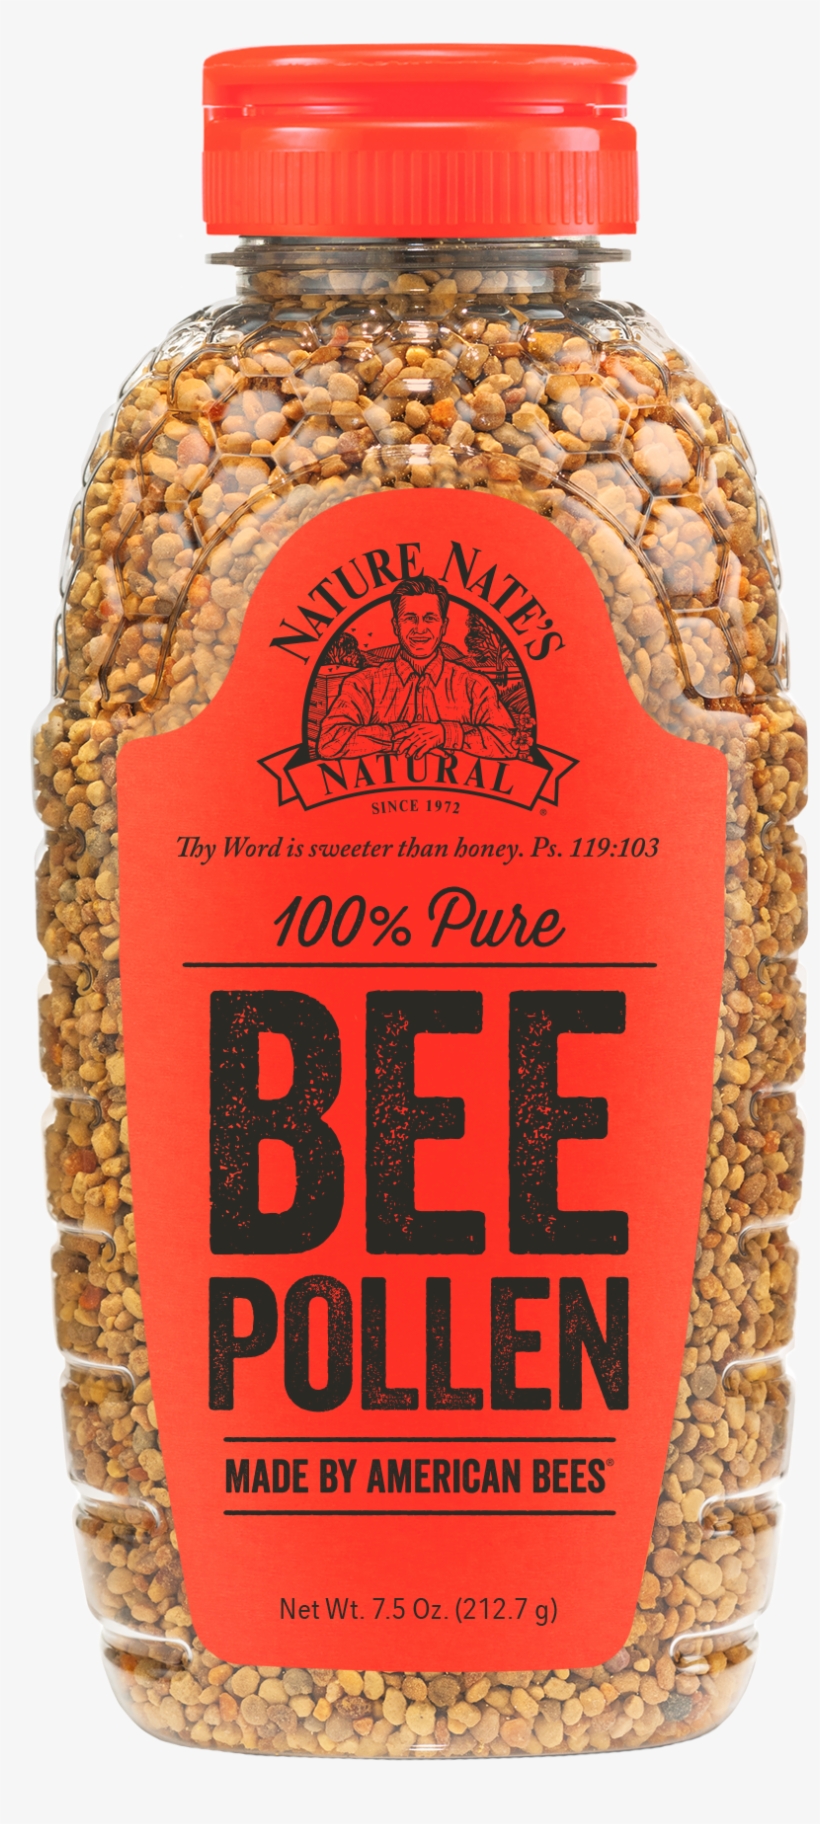 The Good Stuff Is Right Around The Corner - Wegmans Bee Pollen, transparent png #9887971